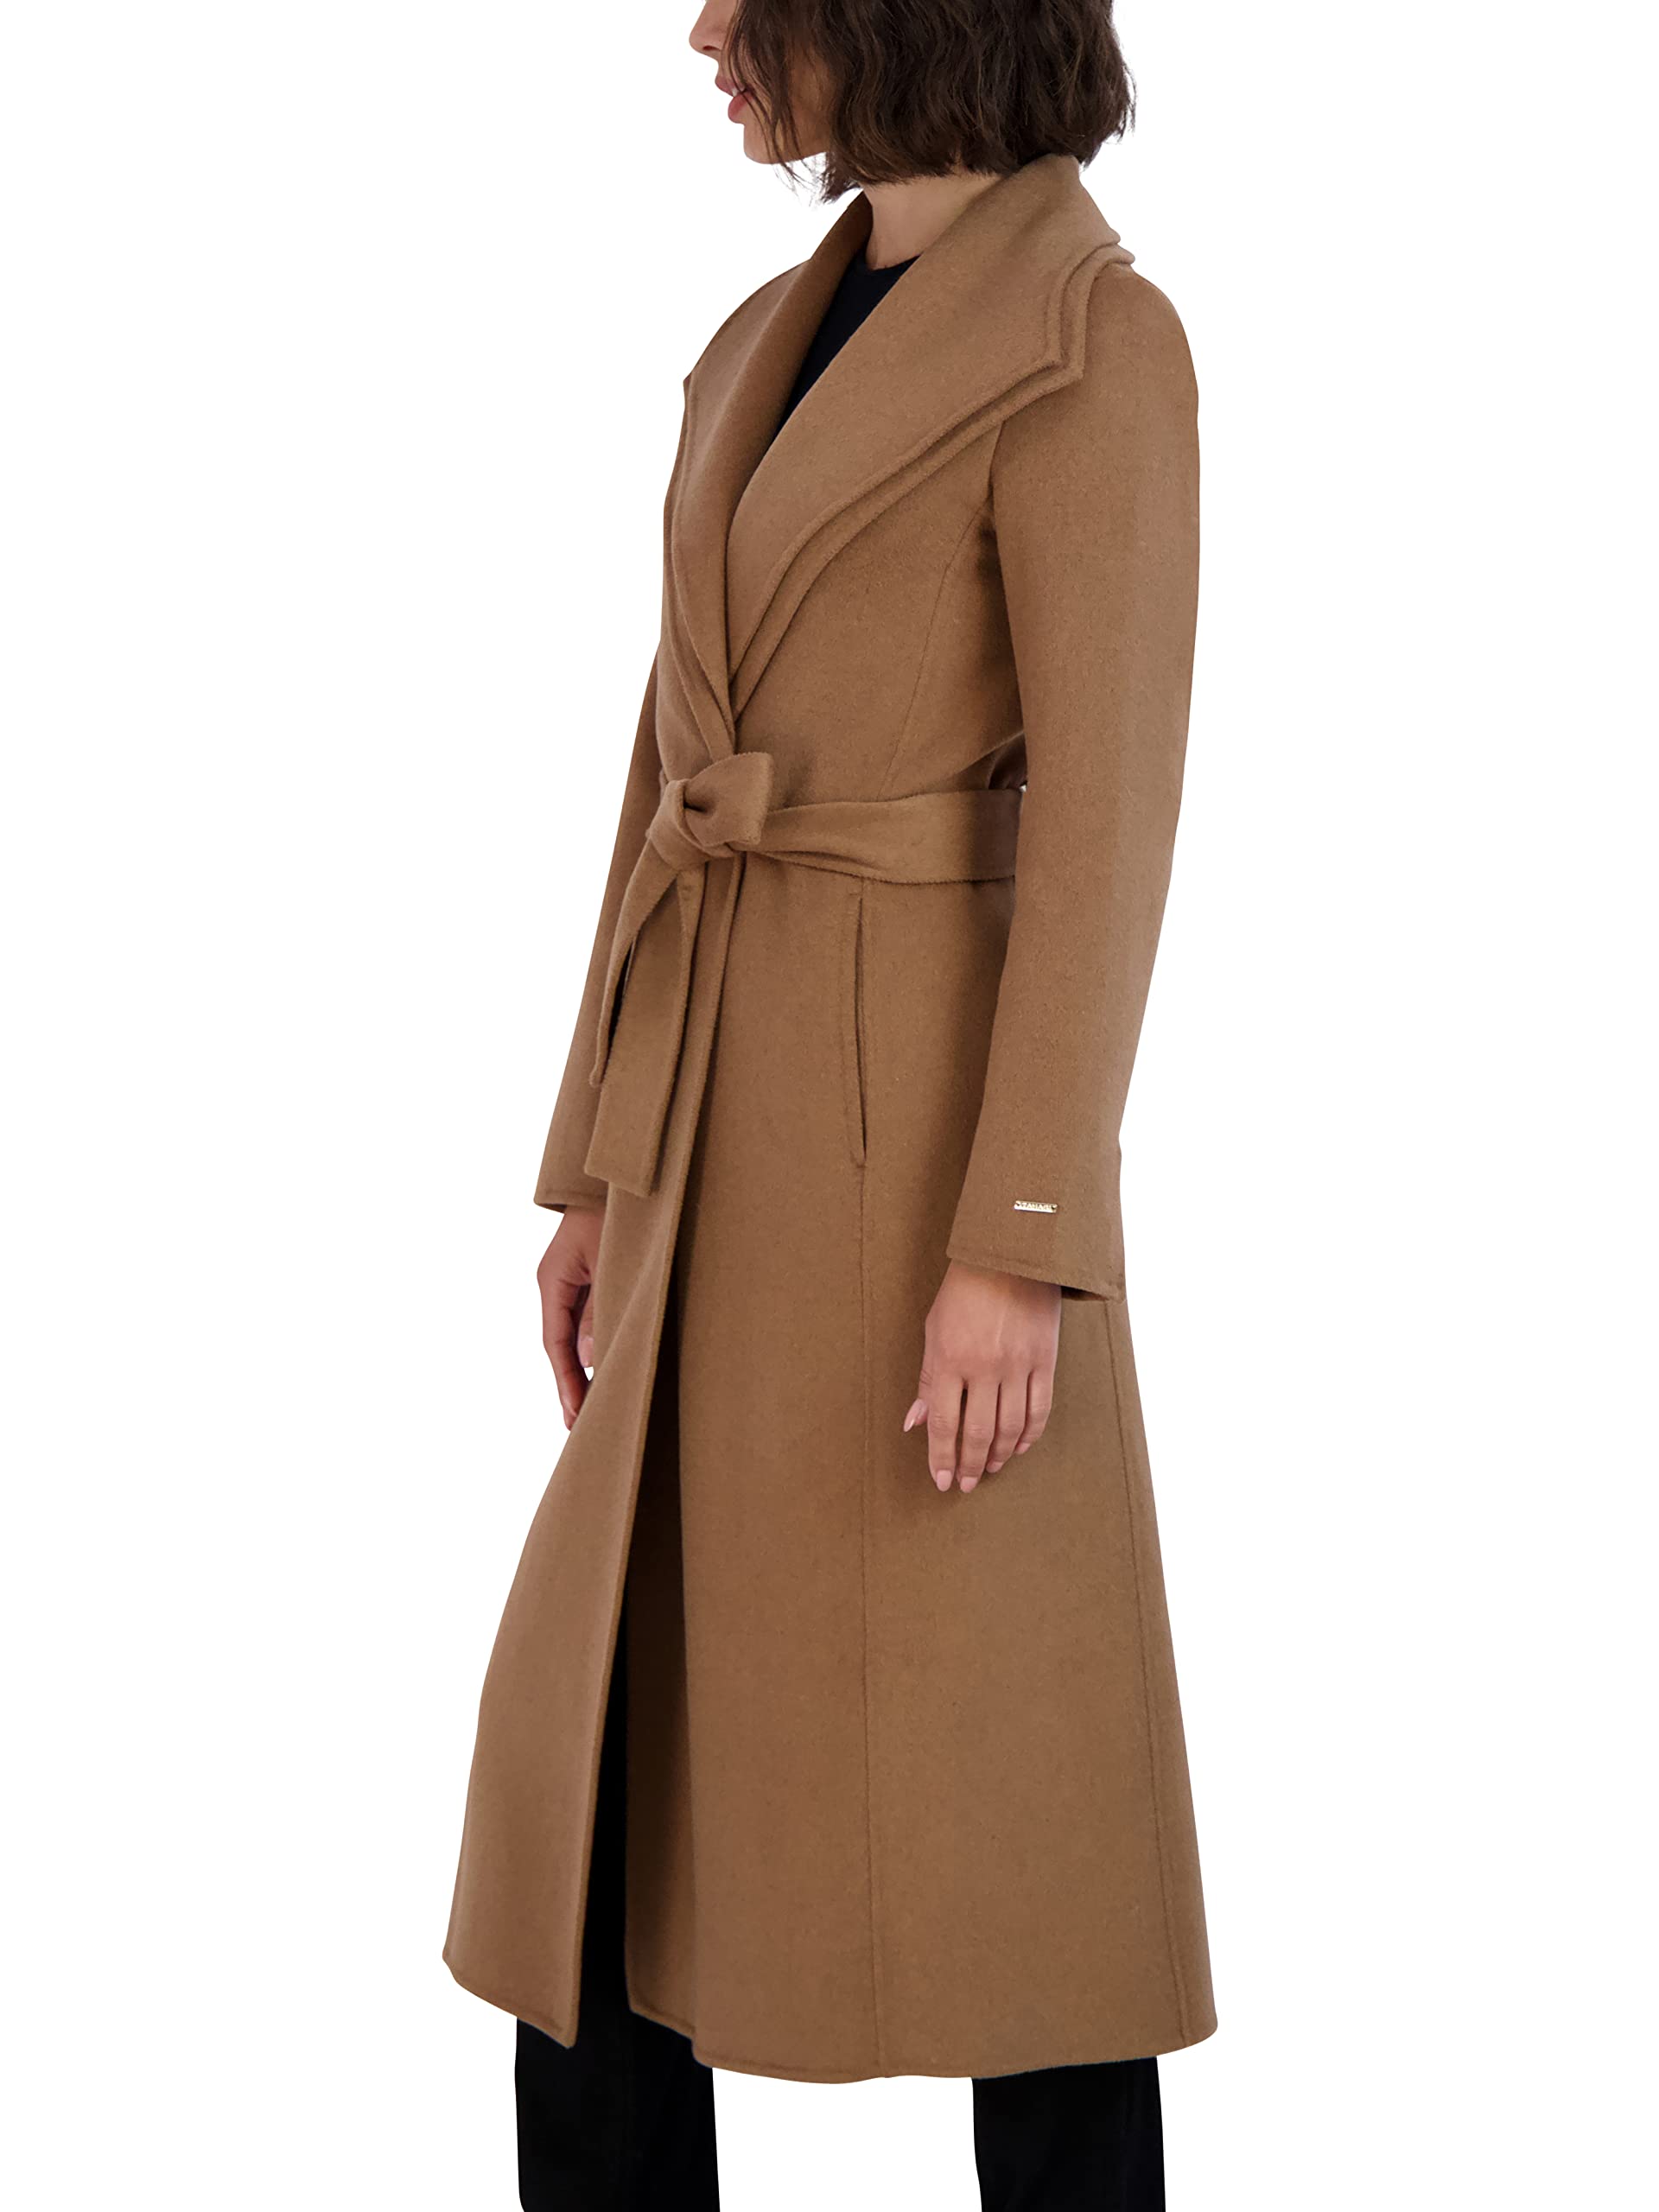 TAHARI Women's Maxi Double Face Wool Blend Wrap Coat